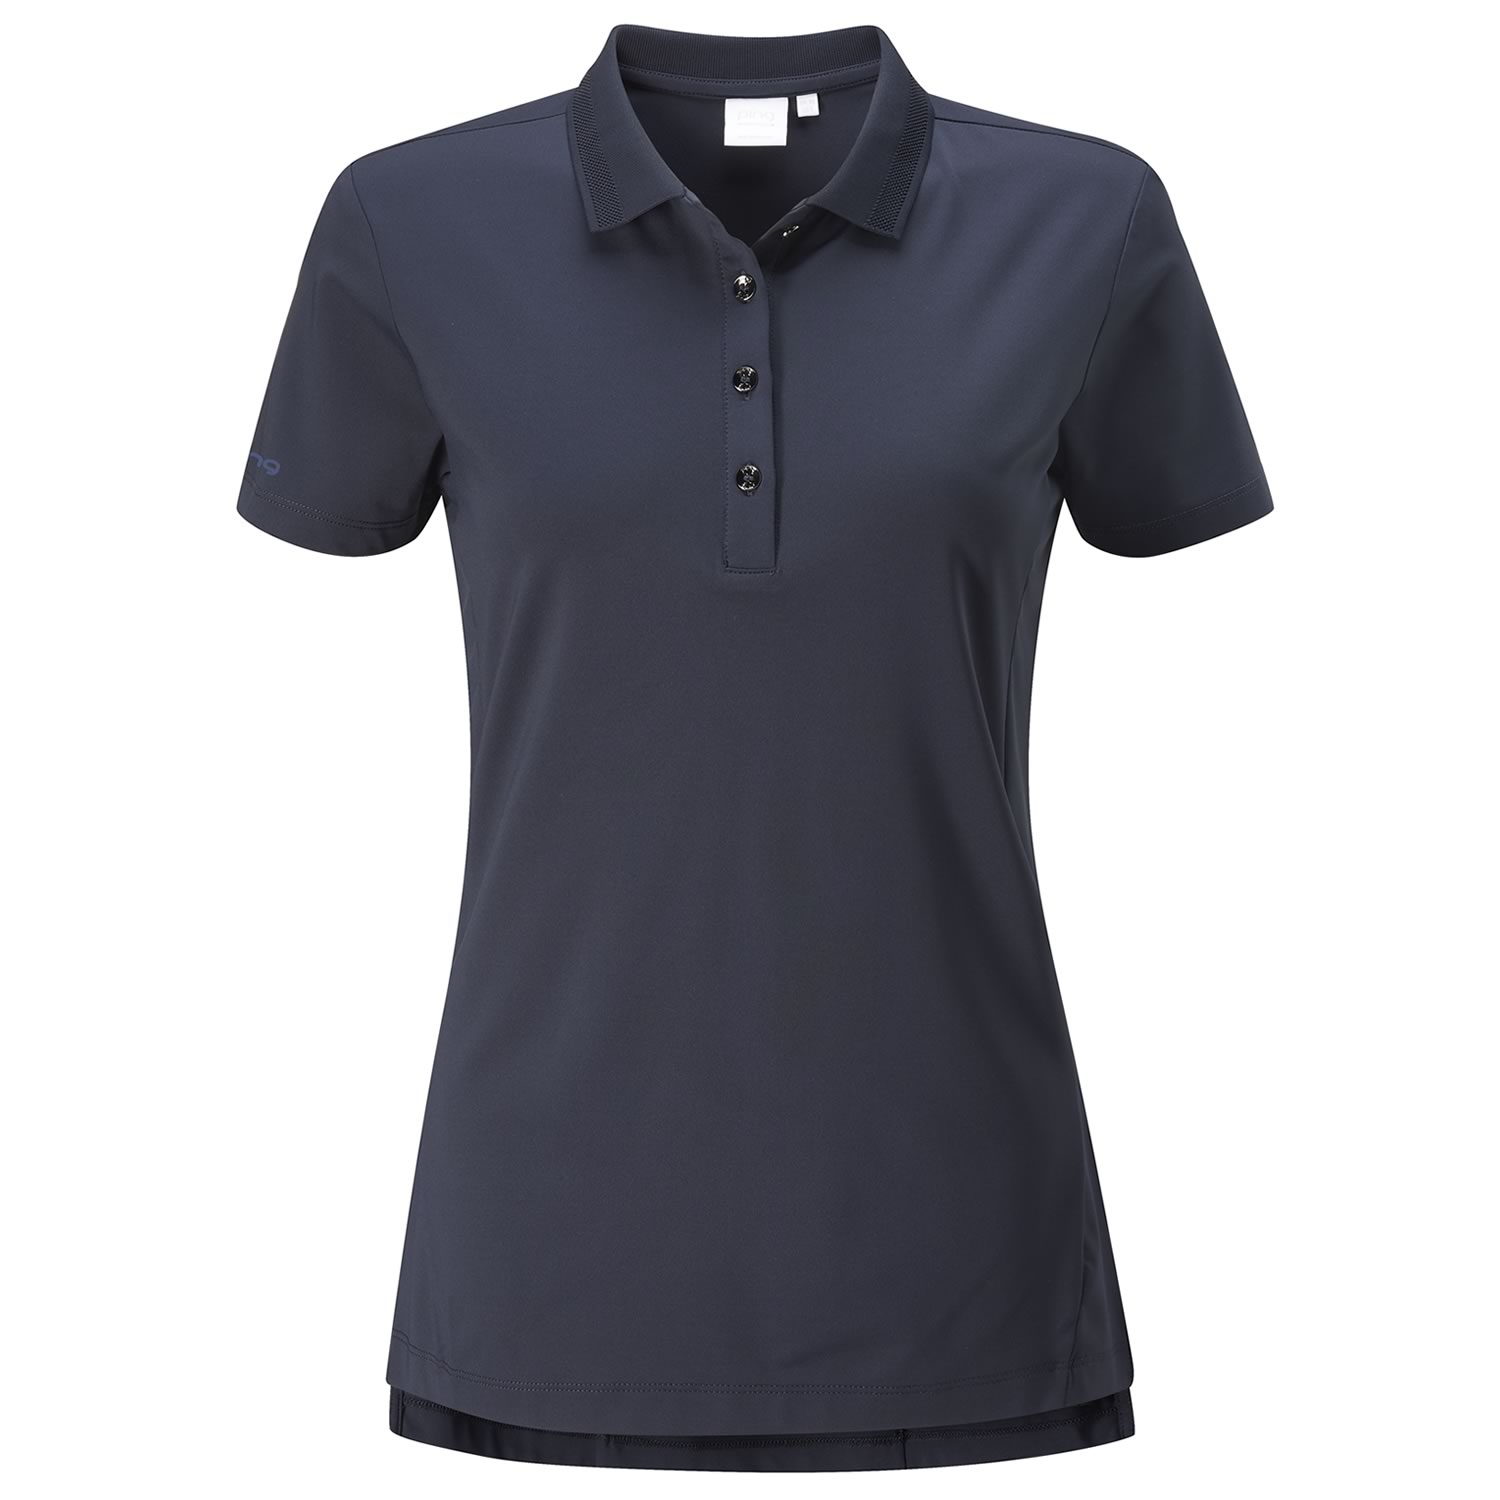 PING Sedona Ladies Golf Polo Shirt